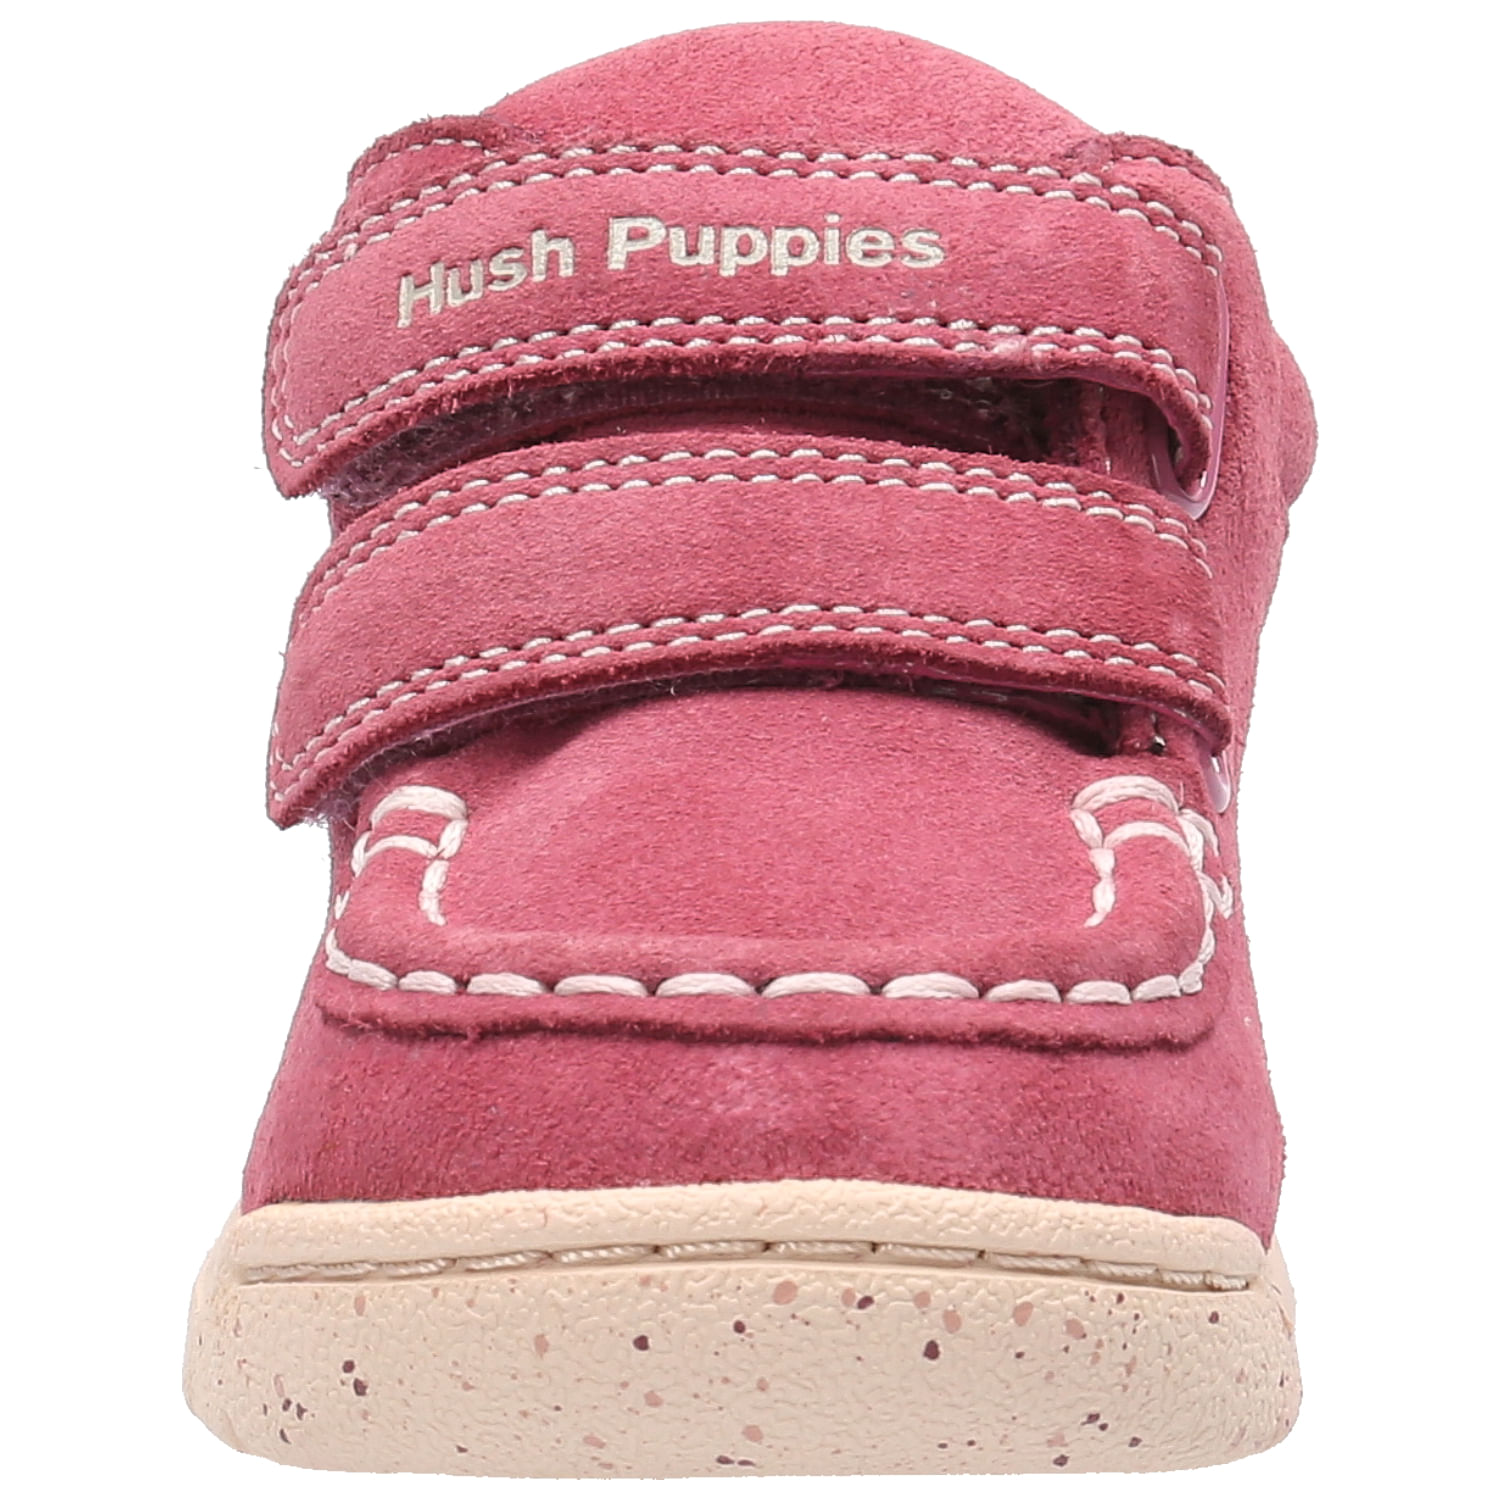 Zapatos Niña - Hush Puppies Kids